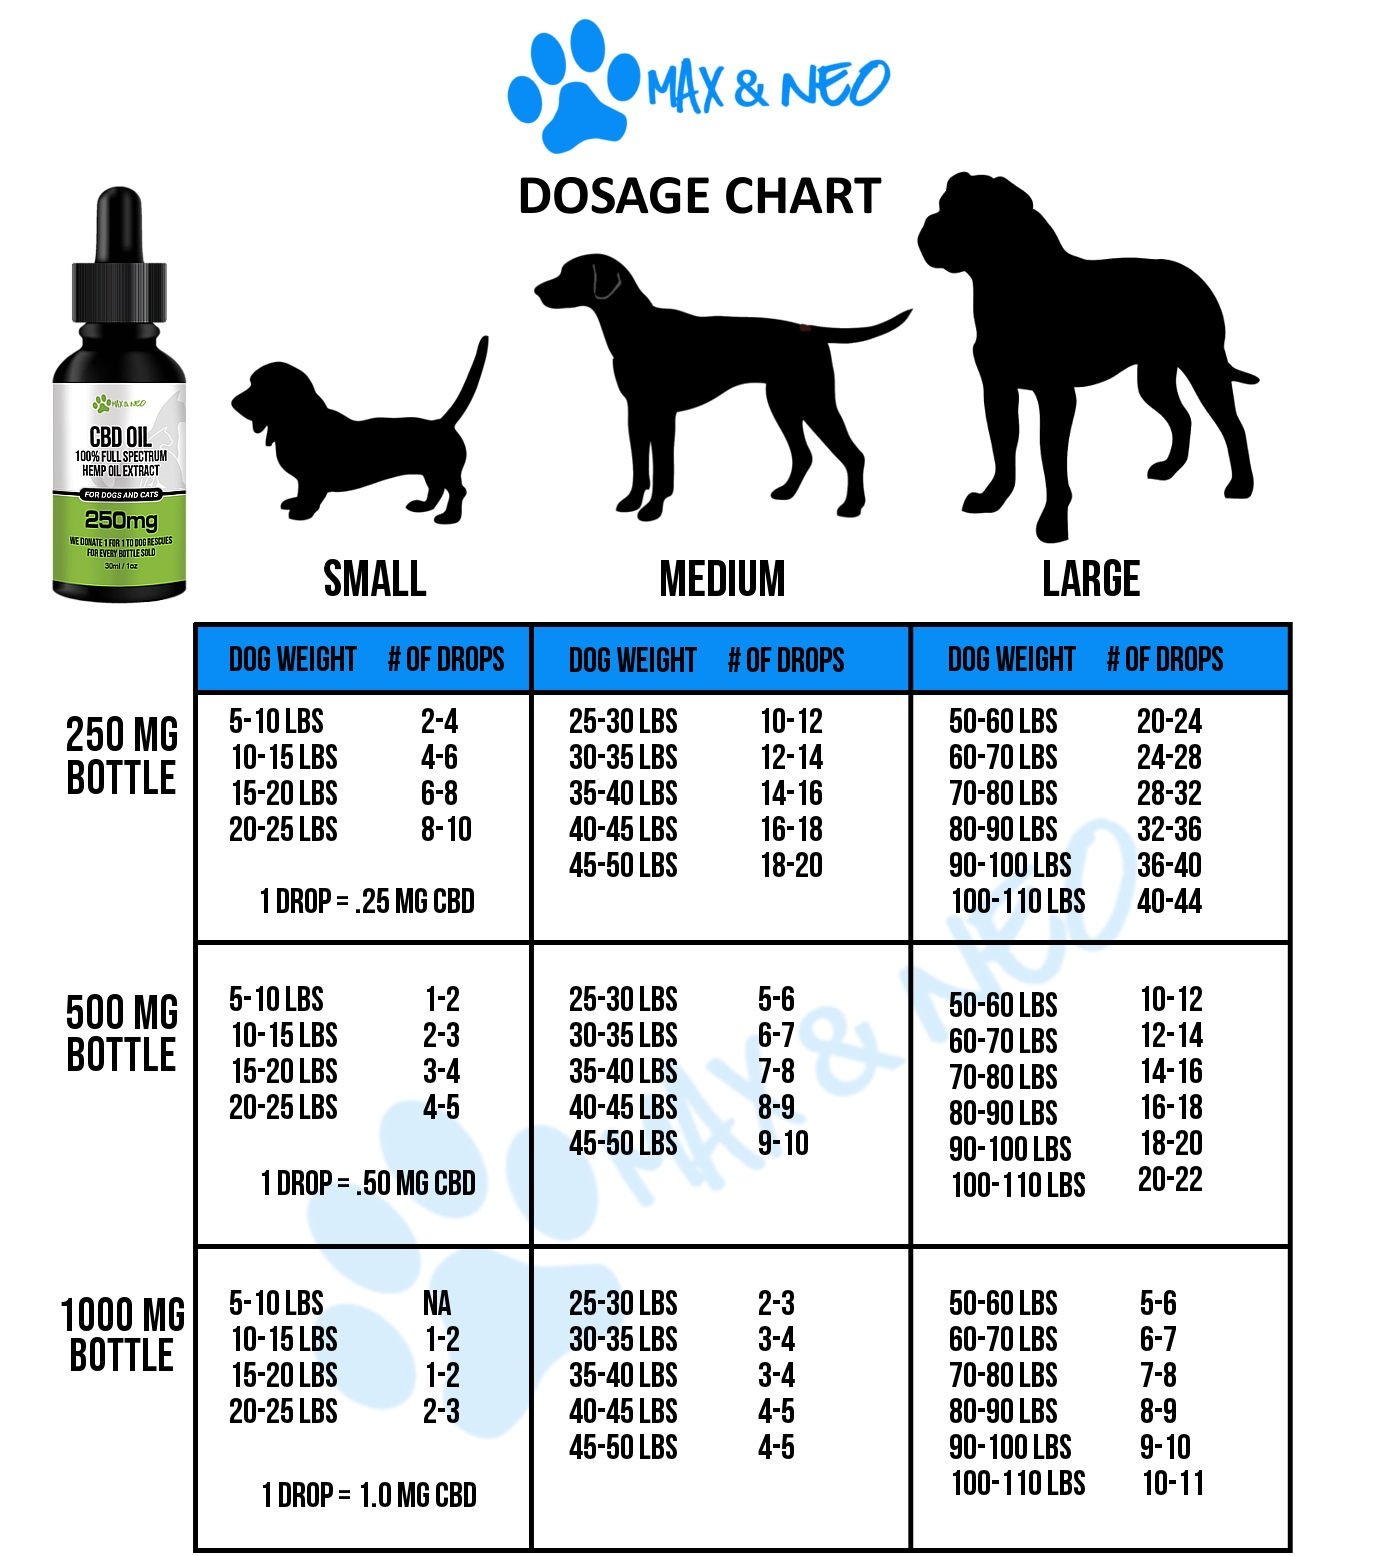 How Do You Administer Cbd Oil For Dogs